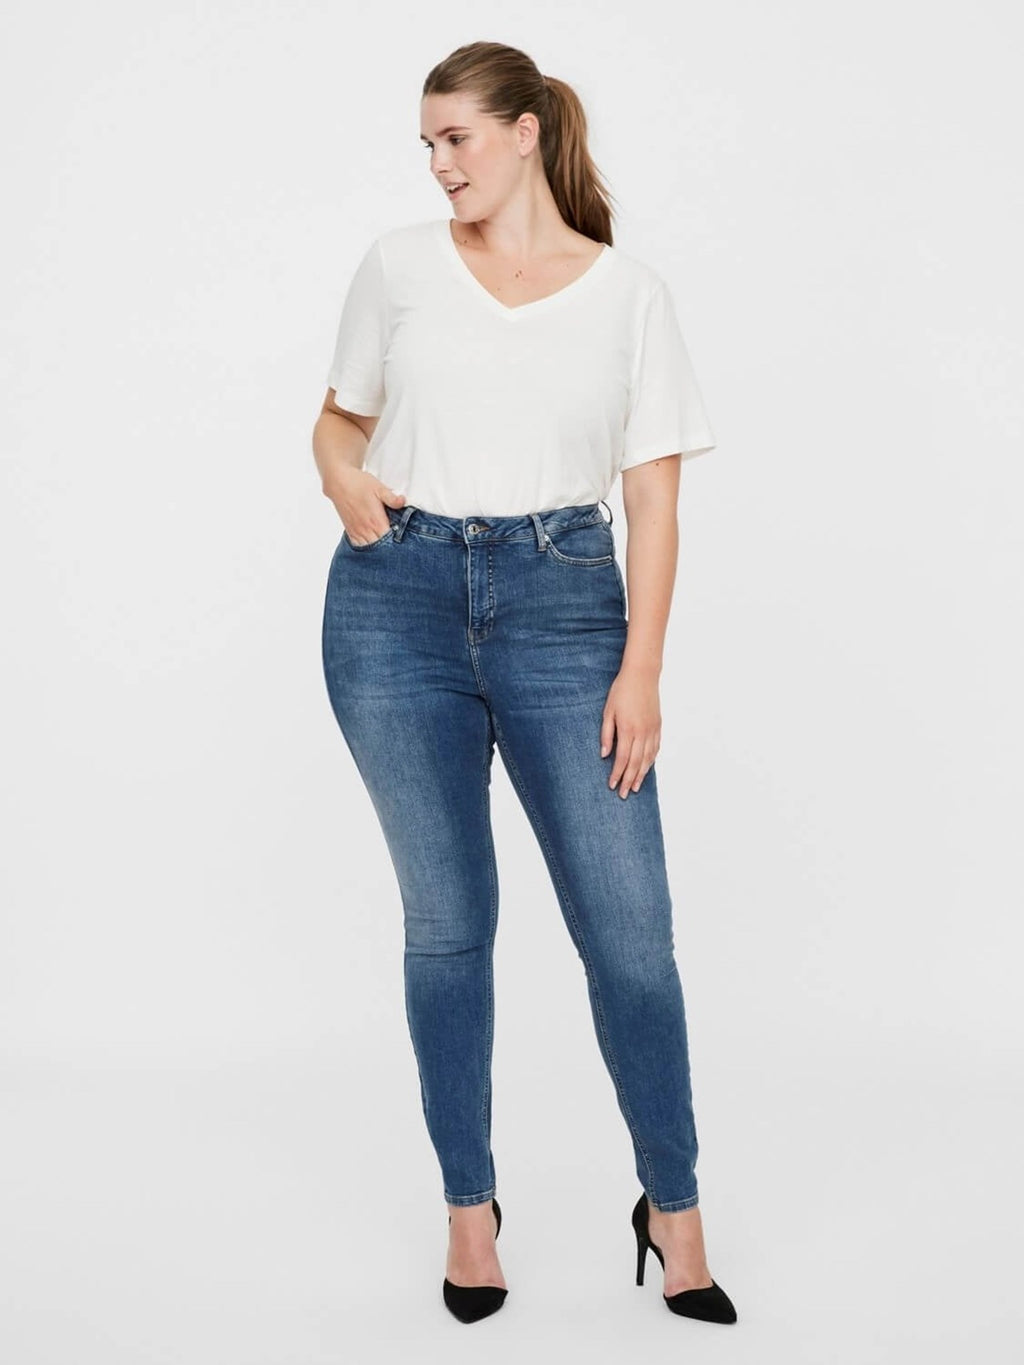 Lora Jeans high waisted (Curve) - Medium blå denim